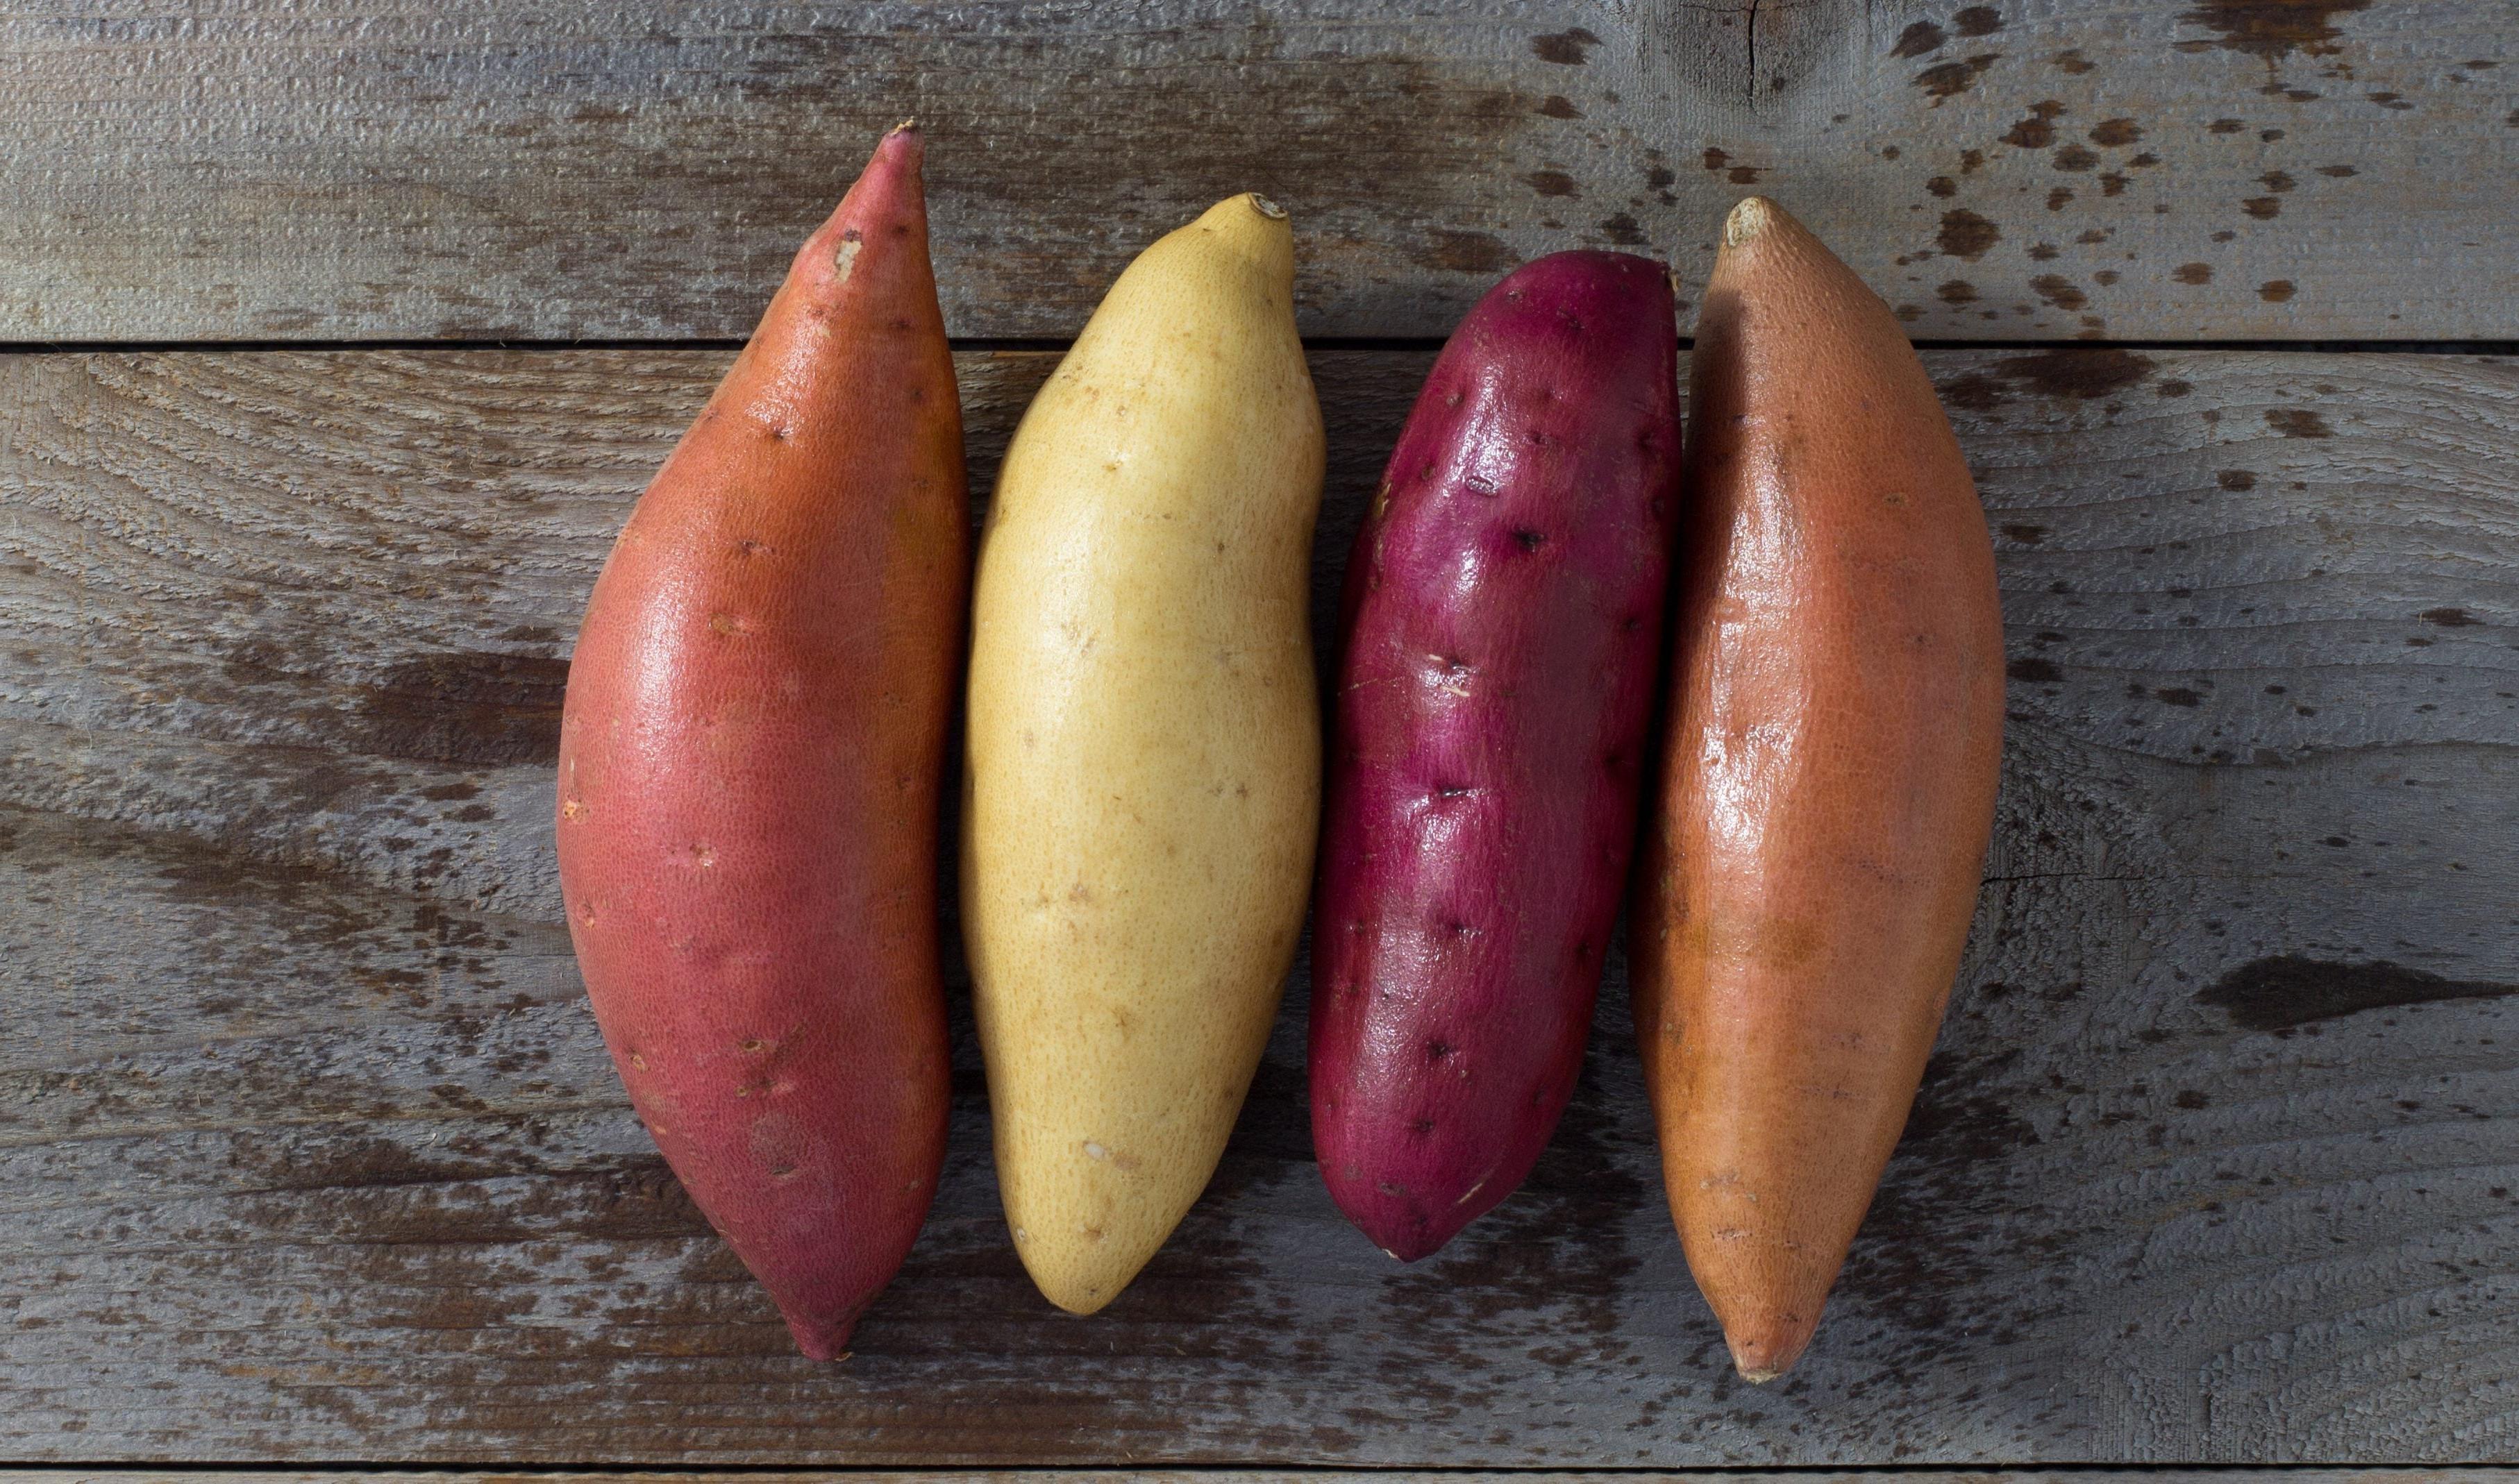 Colors of sweet potatoes